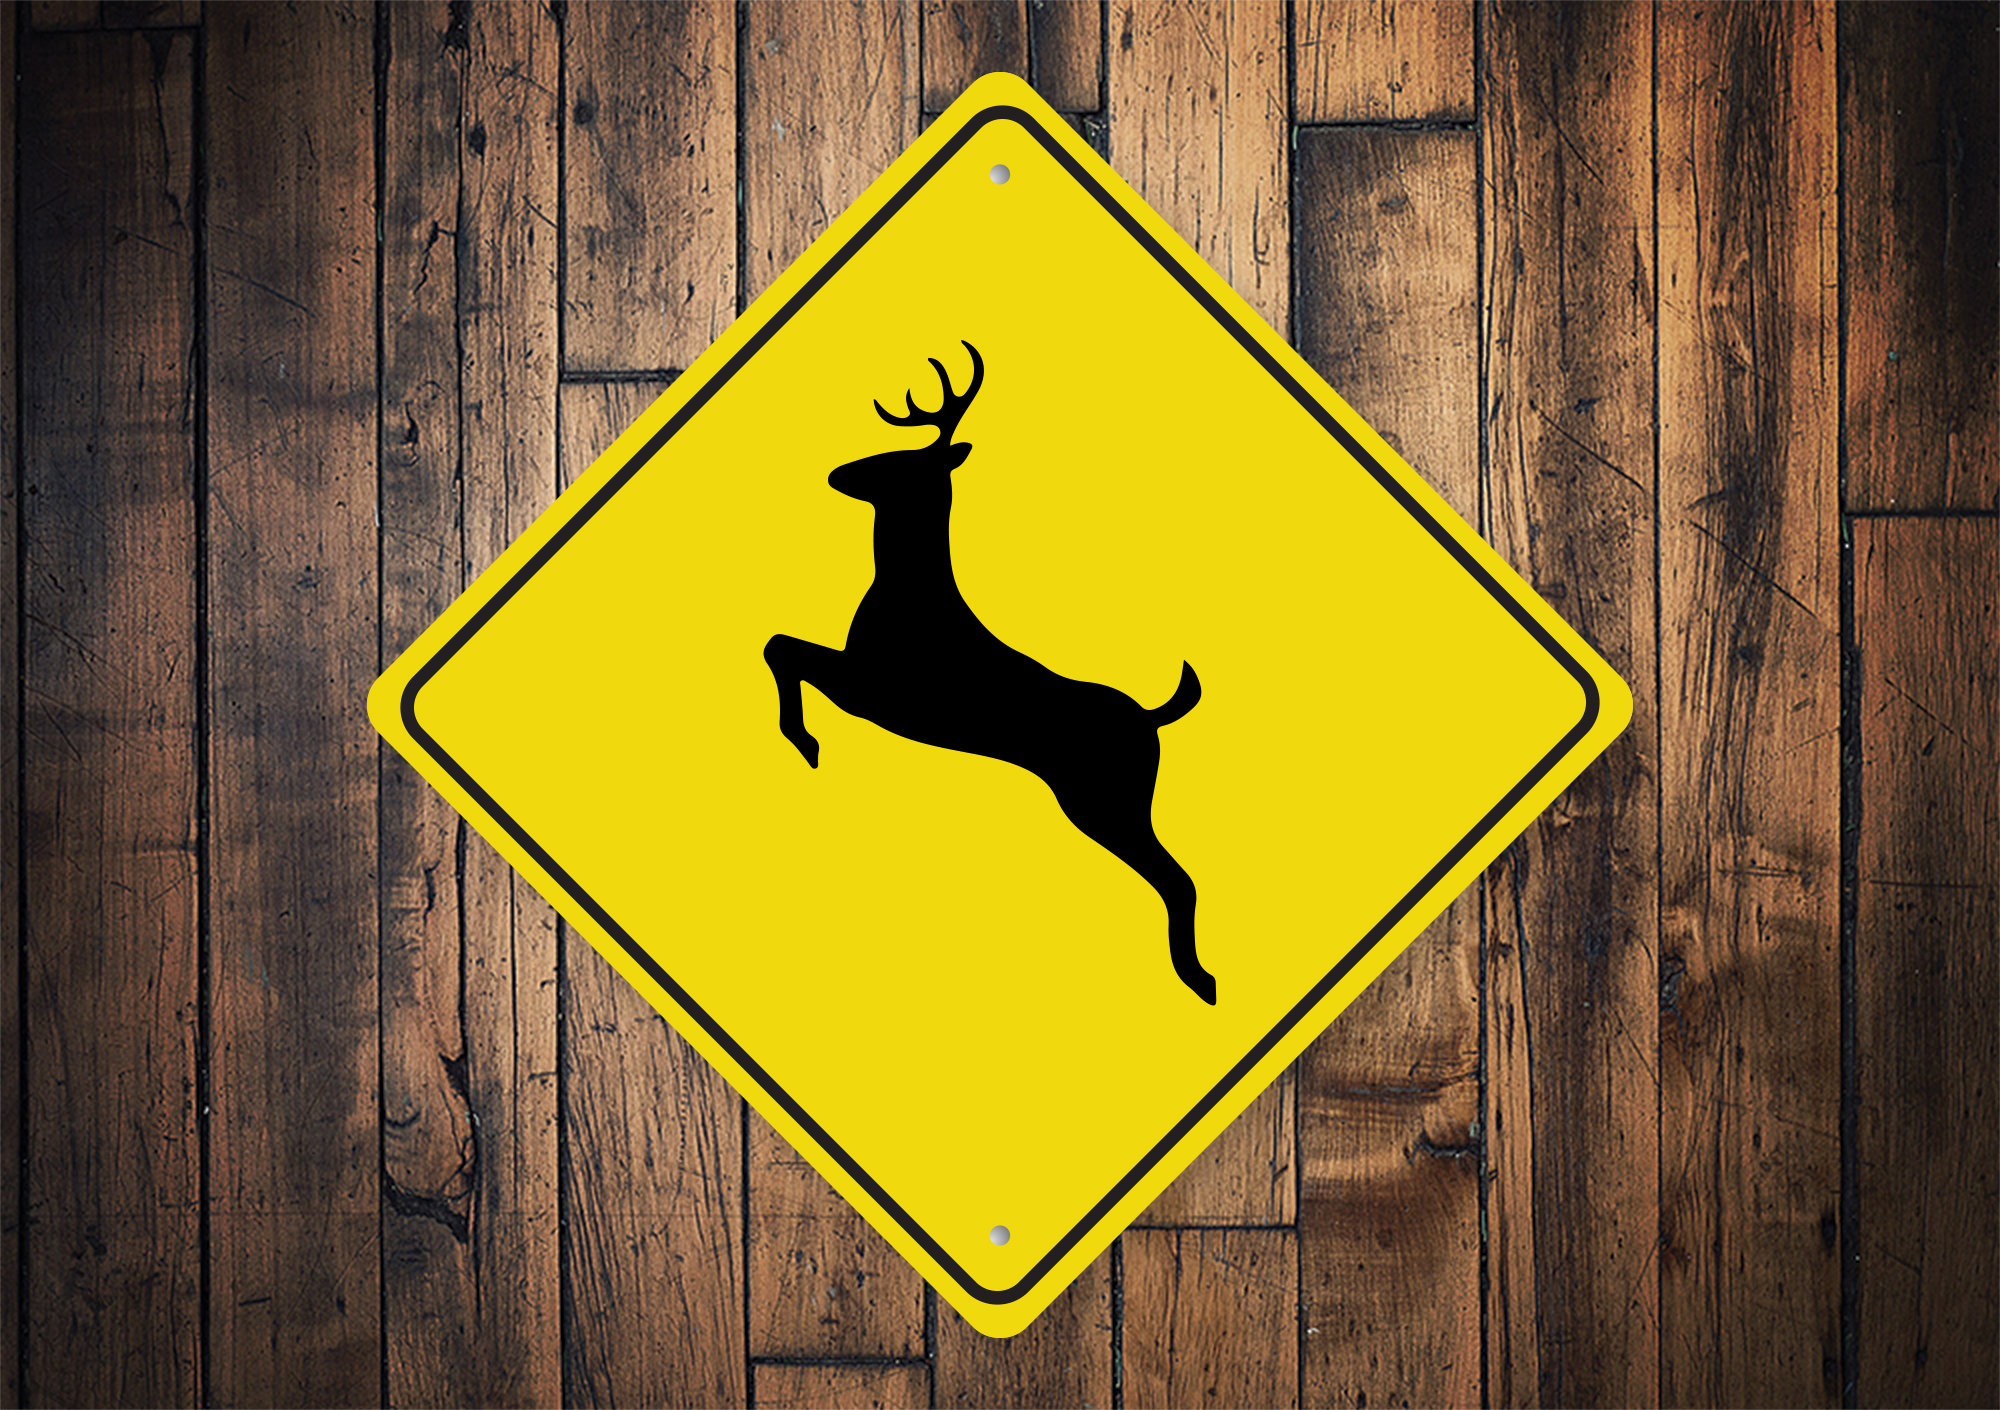 deer-crossing-sign-for-sale-78-ads-for-used-deer-crossing-signs